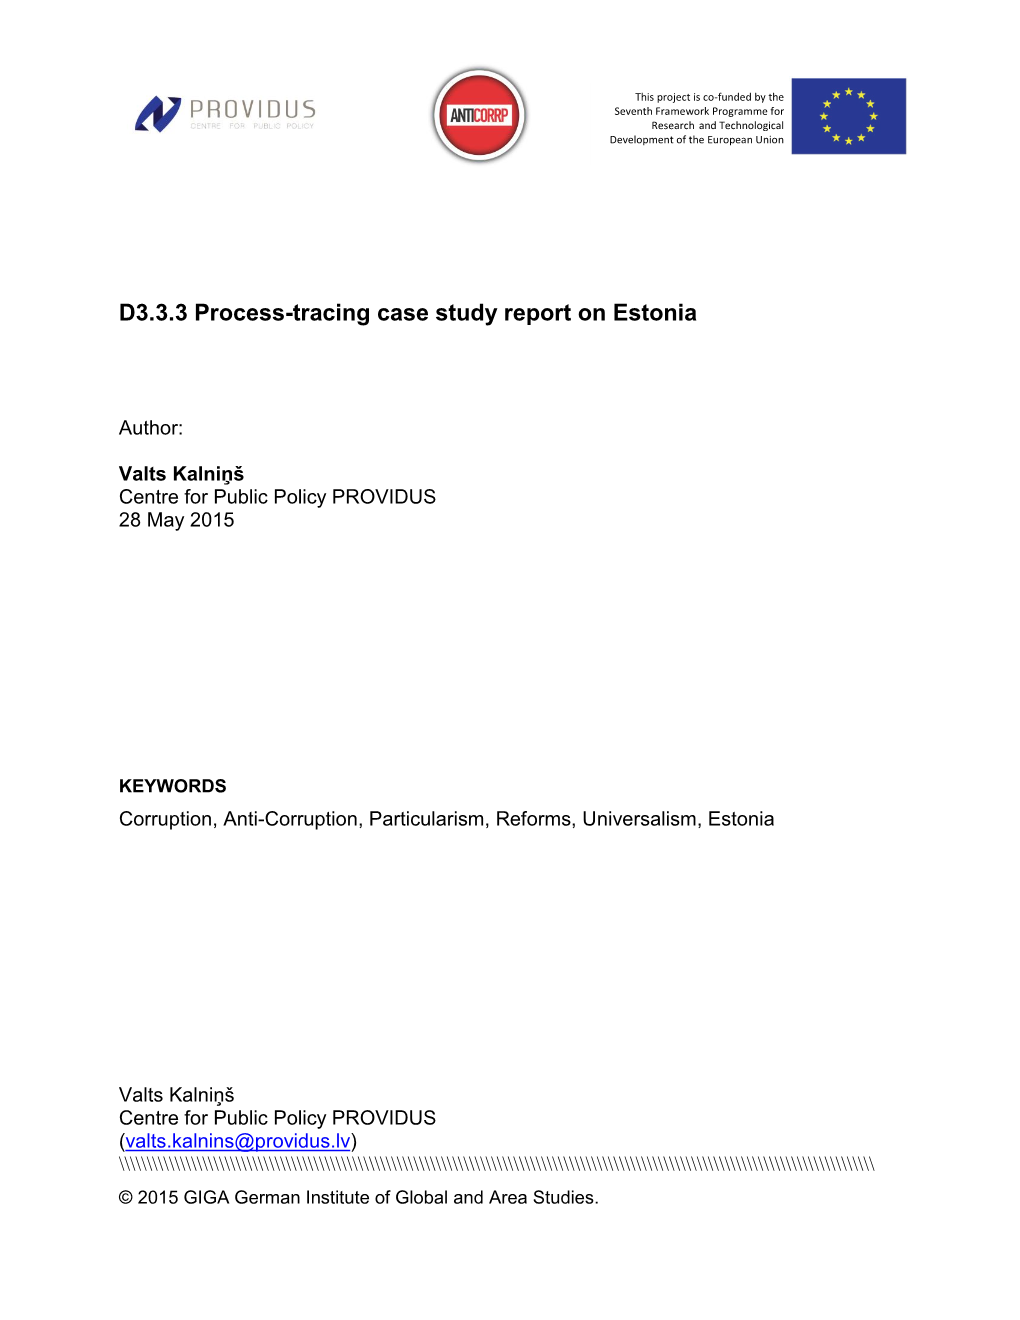 D3.3.3 Process-Tracing Case Study Report on Estonia